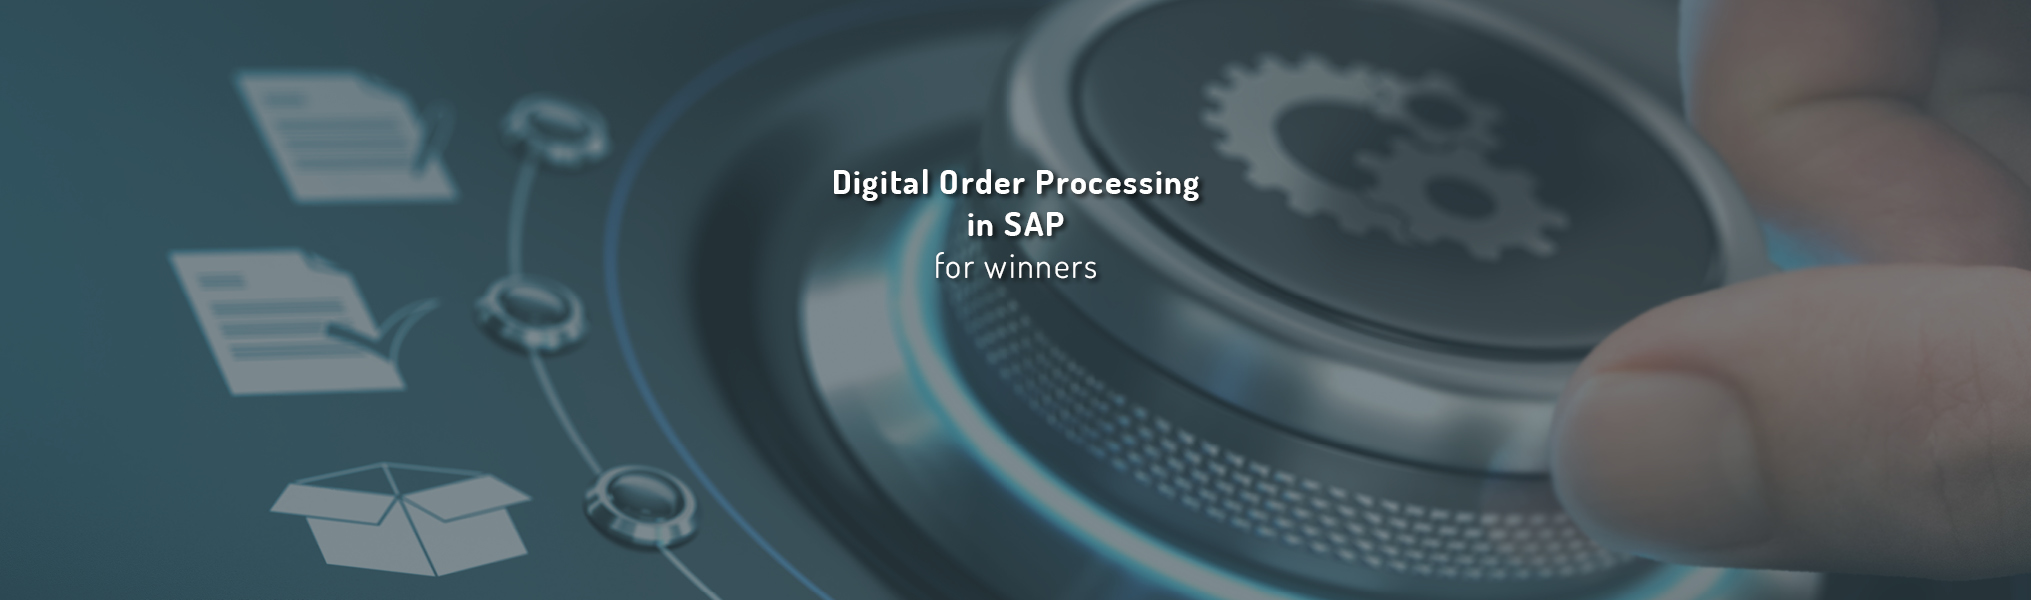 Webinar: Digital Order Processing in SAP for winners